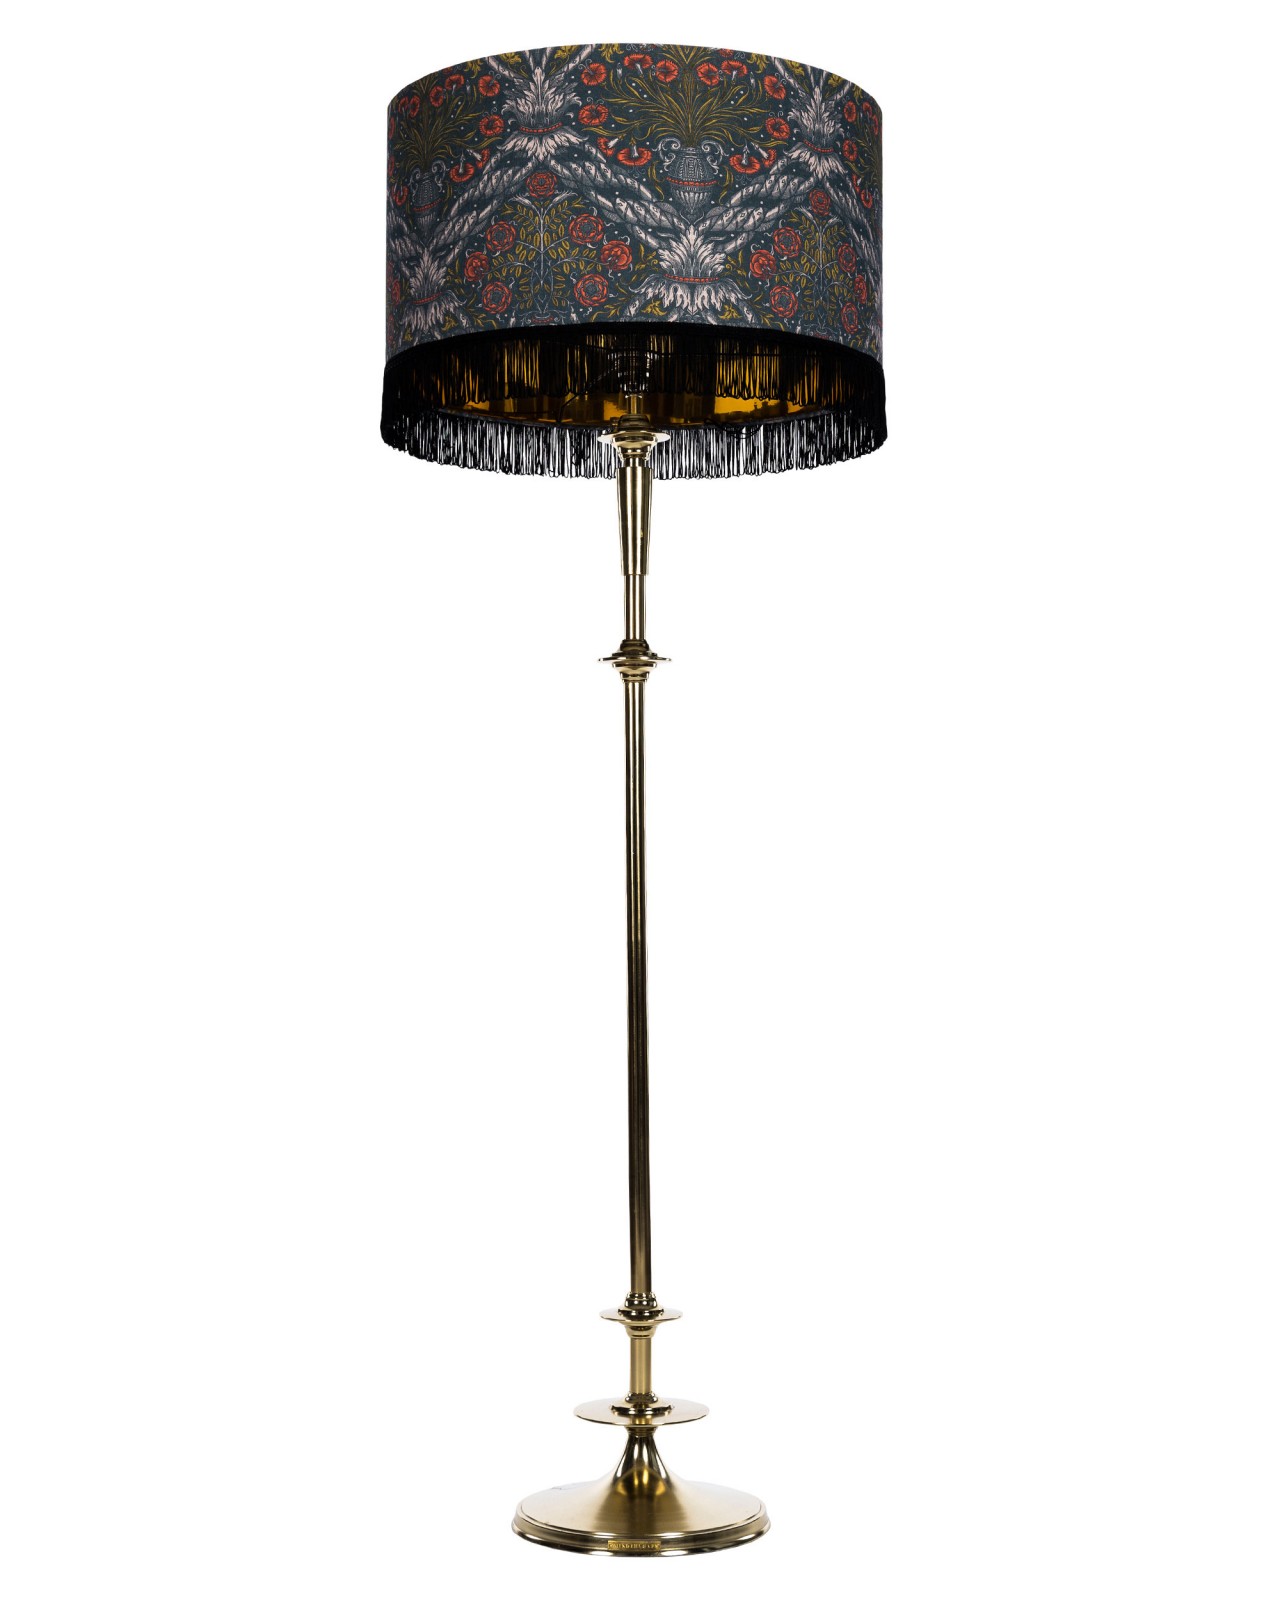 DECORATIVE PANEL REGENCY Floor Lamp